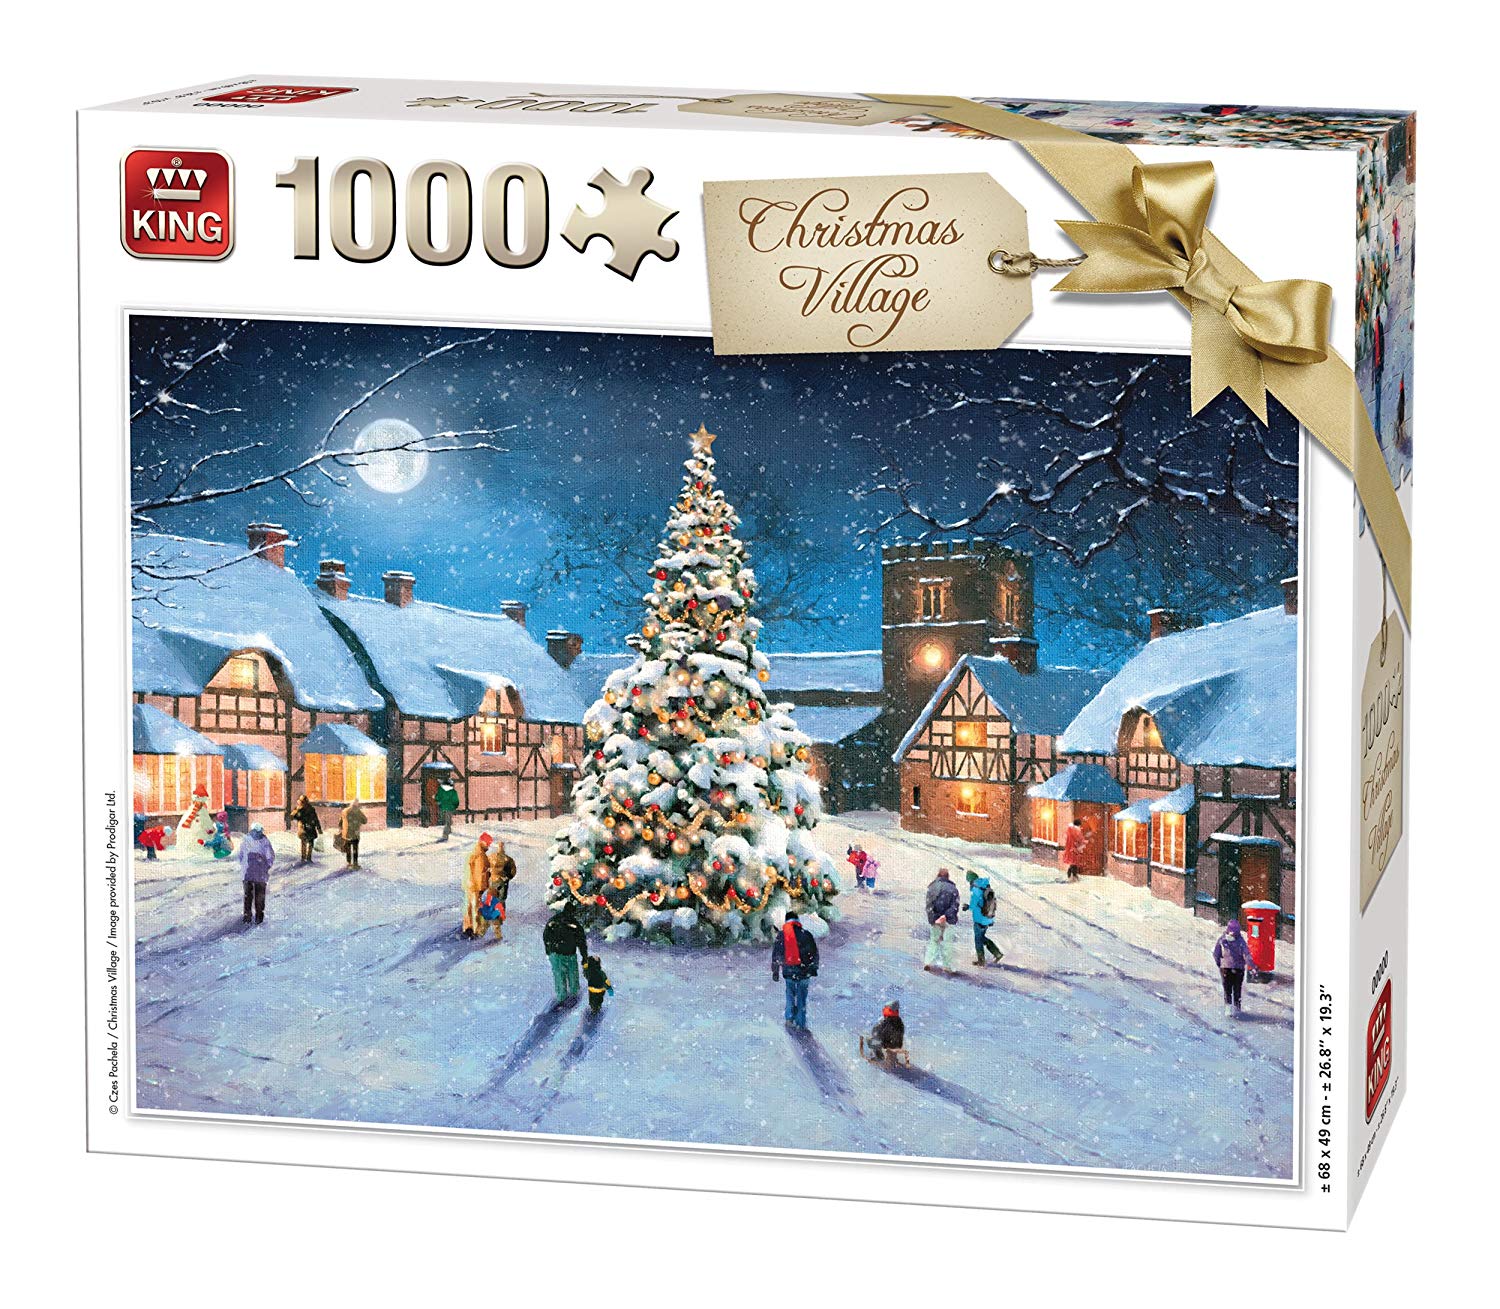 King 14.249,4 Cm Christmas Village Jigsaw Puzzle (1000 Pieces)